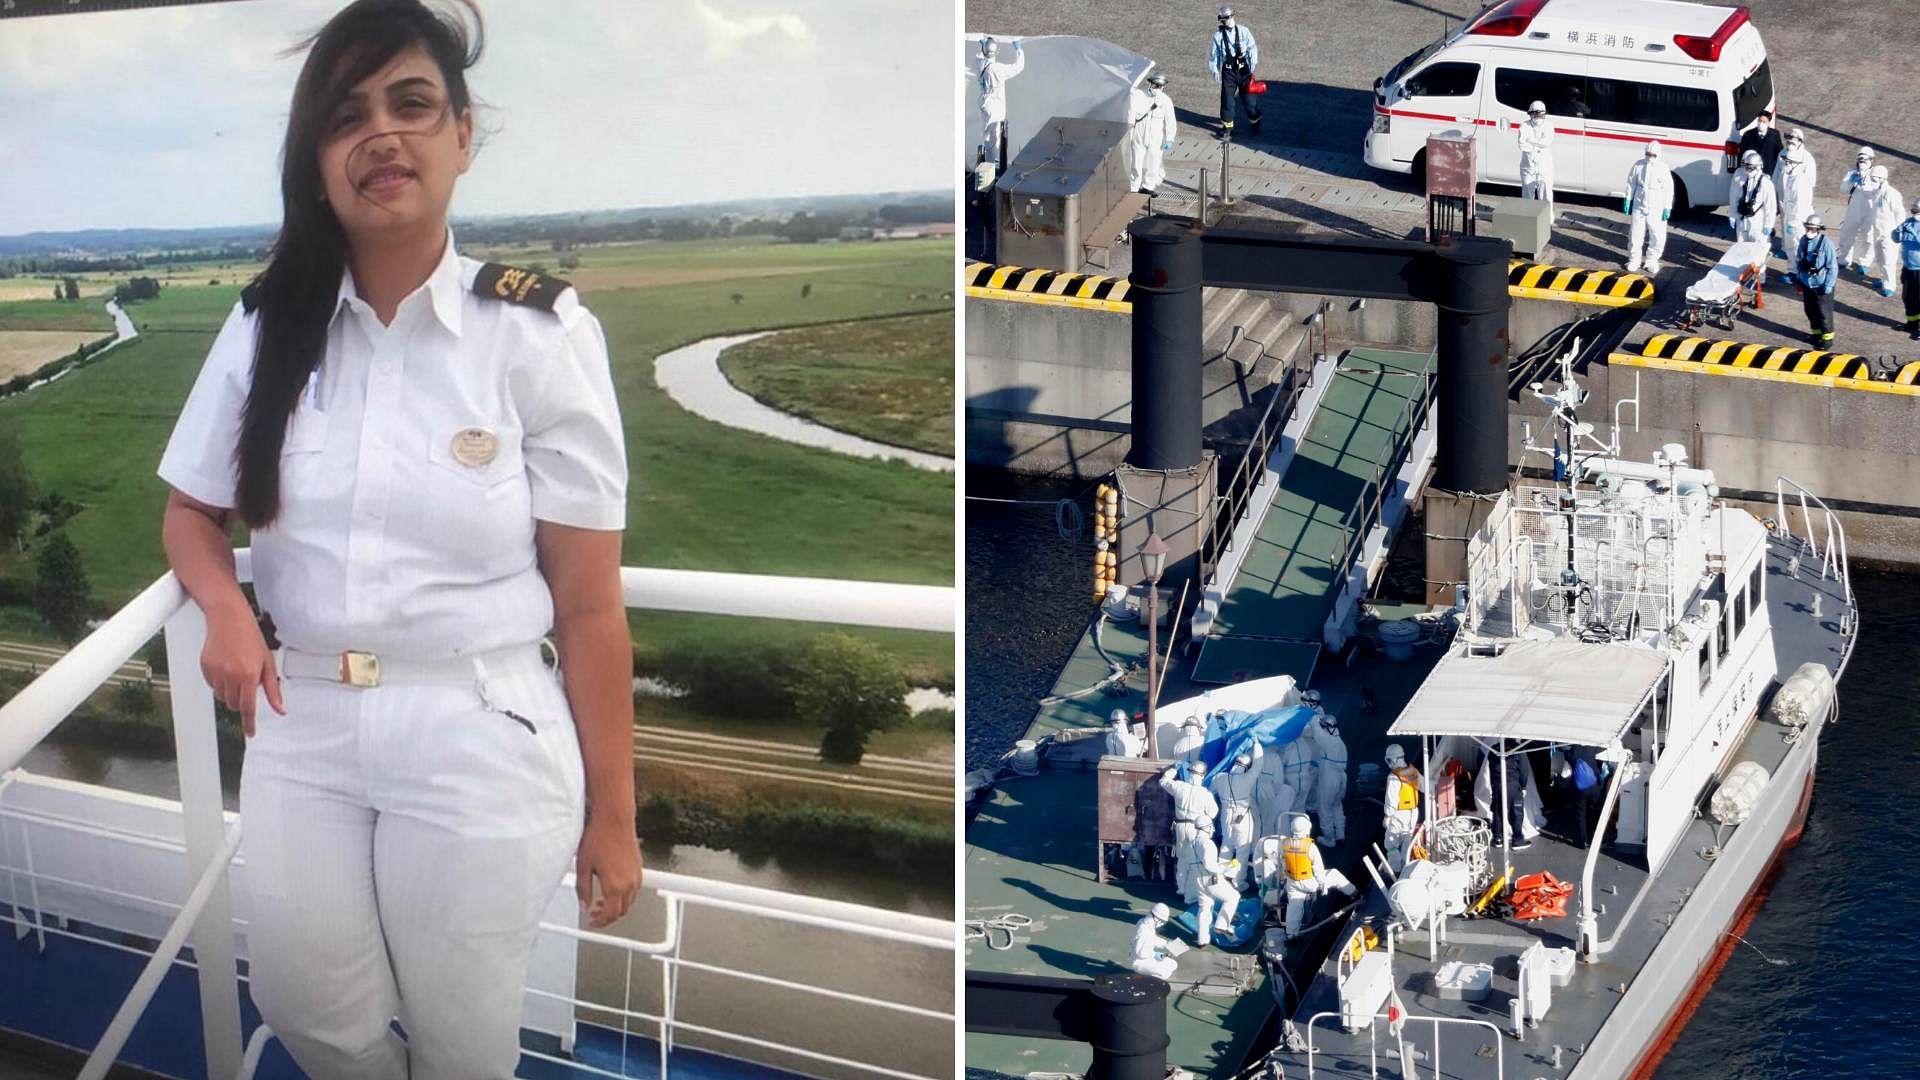 Sonali Thakkar is a security patrol woman onboard the Diamond Princess cruise ship.